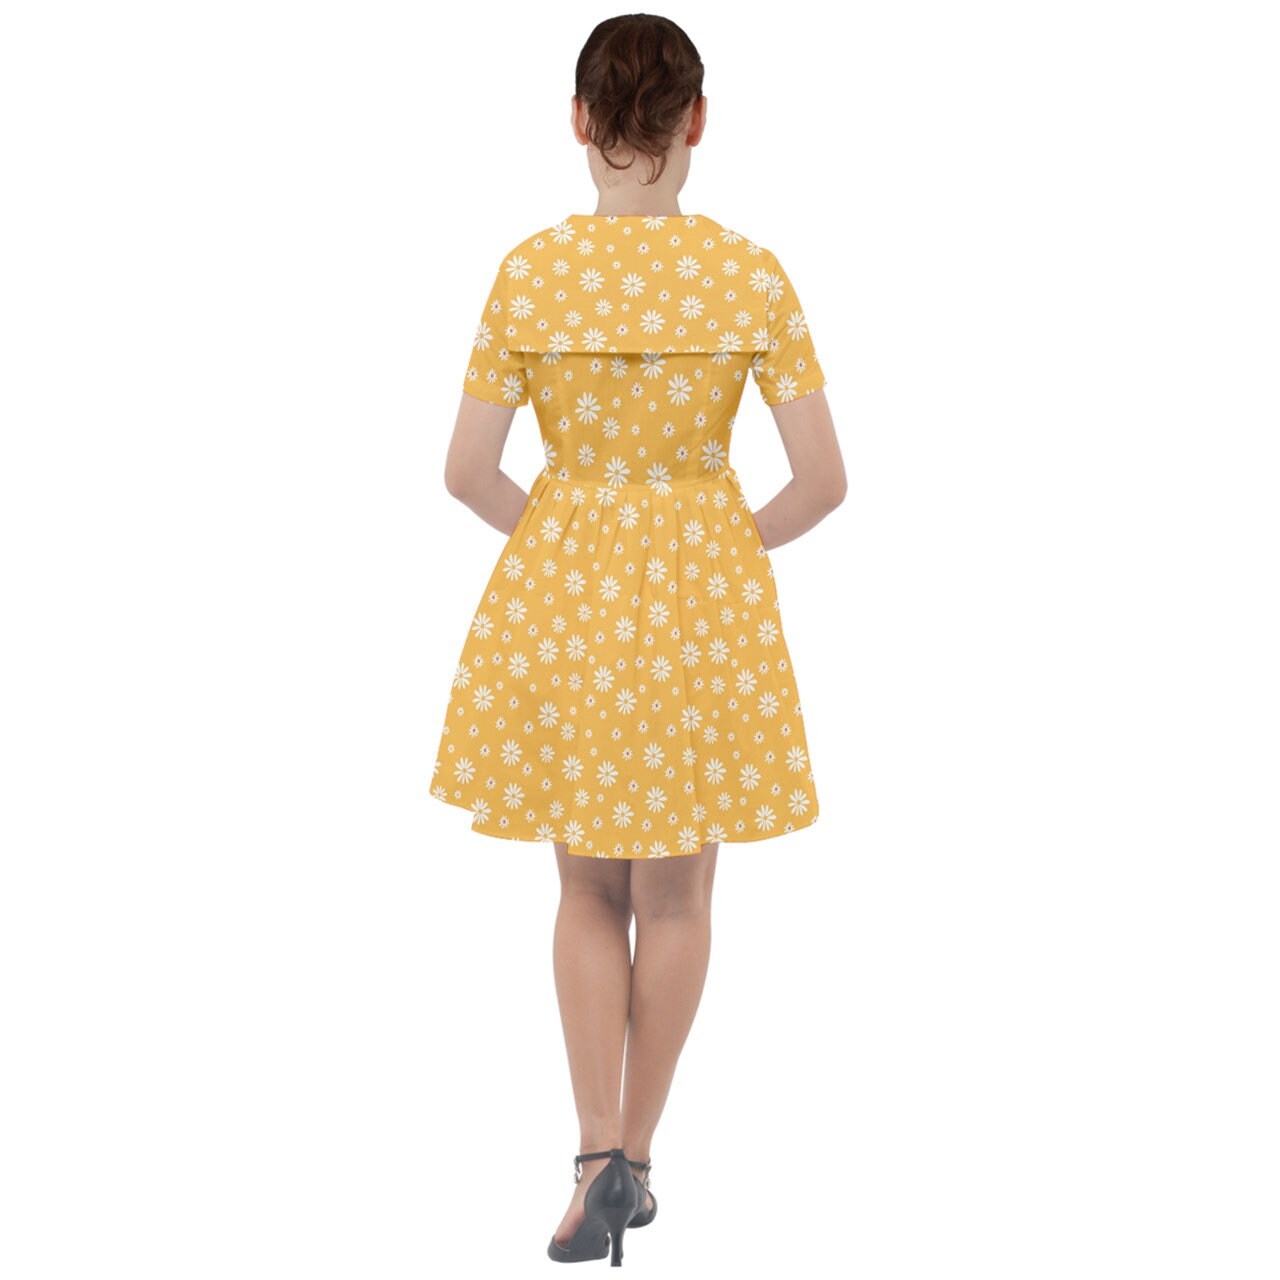 Vintage Dress style, 50s style dress, Yellow Floral Dress, Retro Dress, Yellow Sun Dress, Rockabilly Dress, Sailor Dress, Pin Up Dress